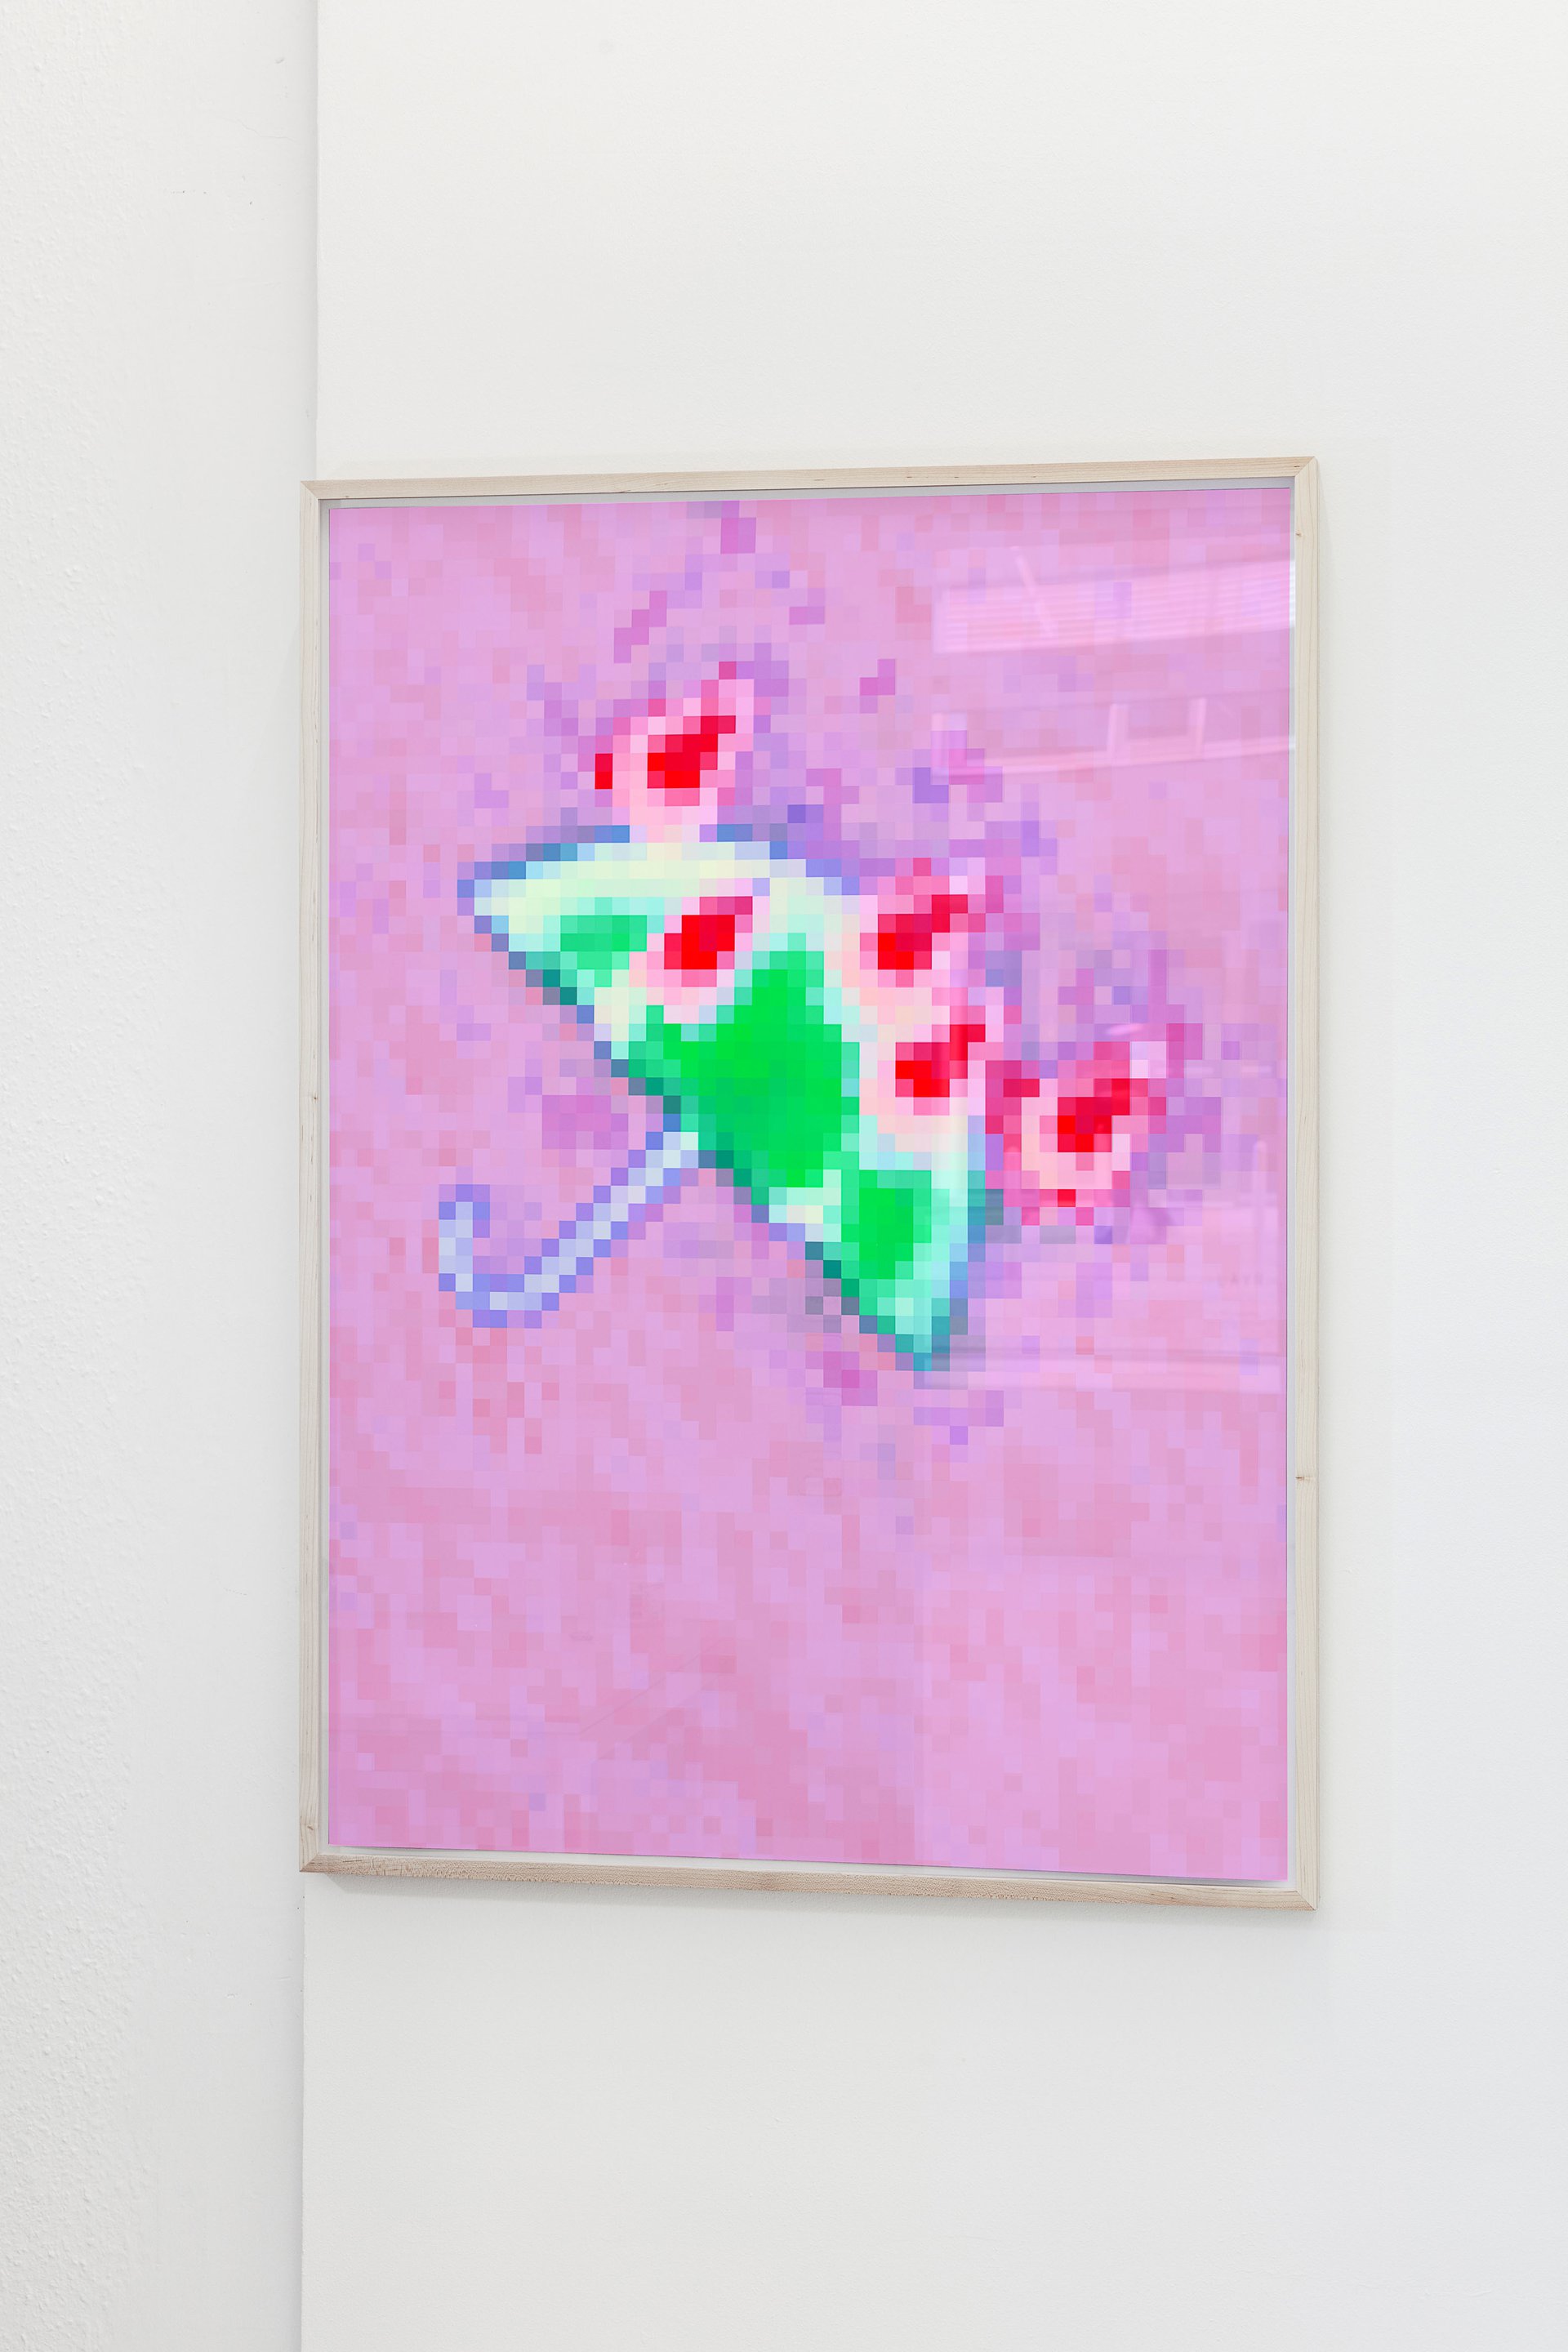 Lisa HolzerRain / Umbrella (pink/green), 2021Pigment print on cotton paper, black marker on wood110.3 × 80.1 cm